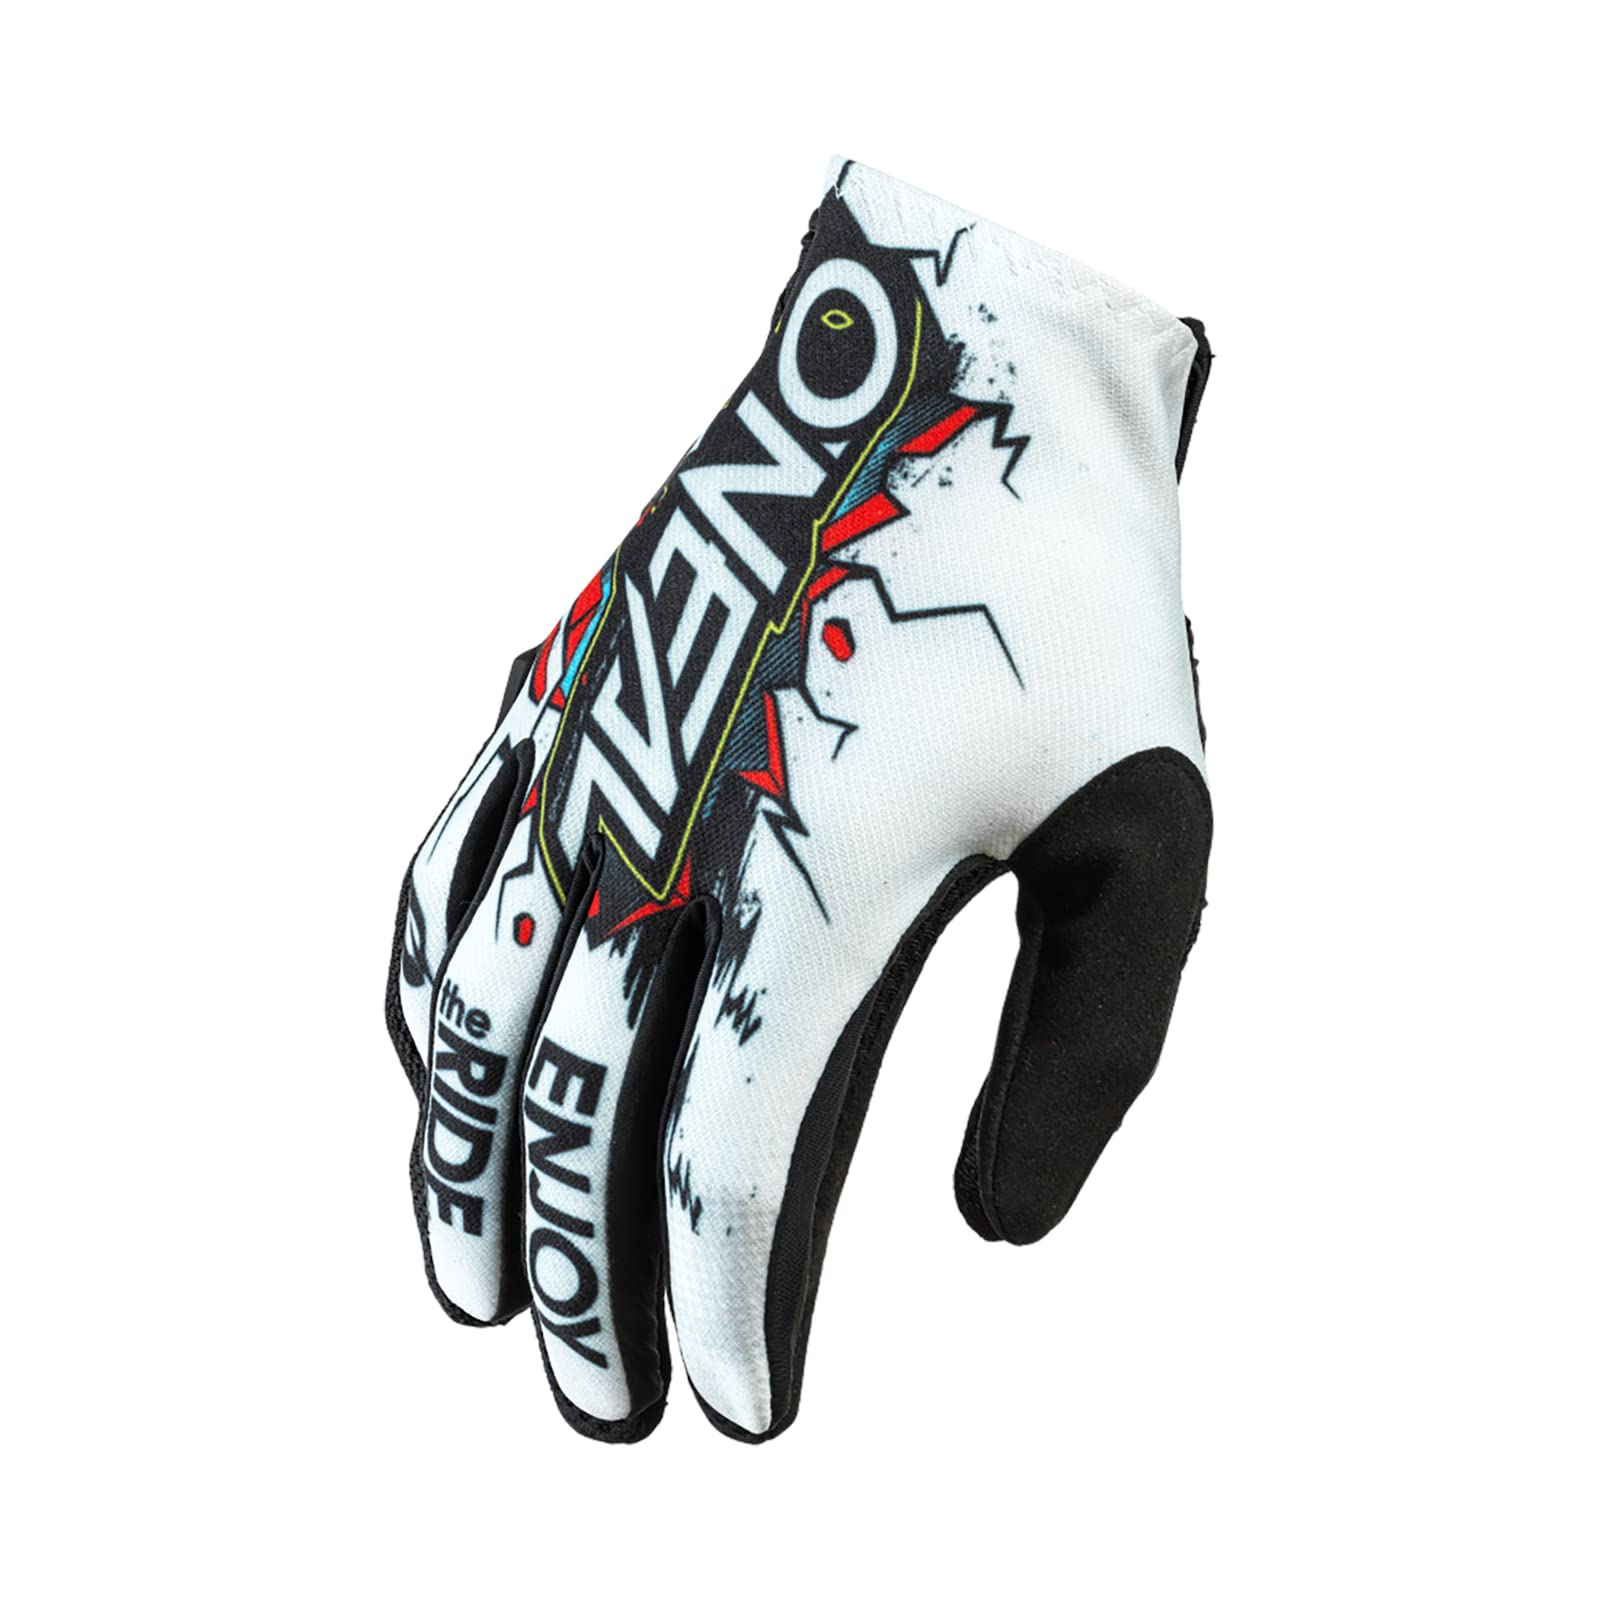 O'NEAL | Fahrrad- & Motocross-Handschuhe | MX MTB DH FR Downhill Freeride | Langlebige, Flexible Materialien, belüftete Handoberseite | Matrix Glove Villain | Unisex | Schwarz Weiß | Größe XXL von O'NEAL